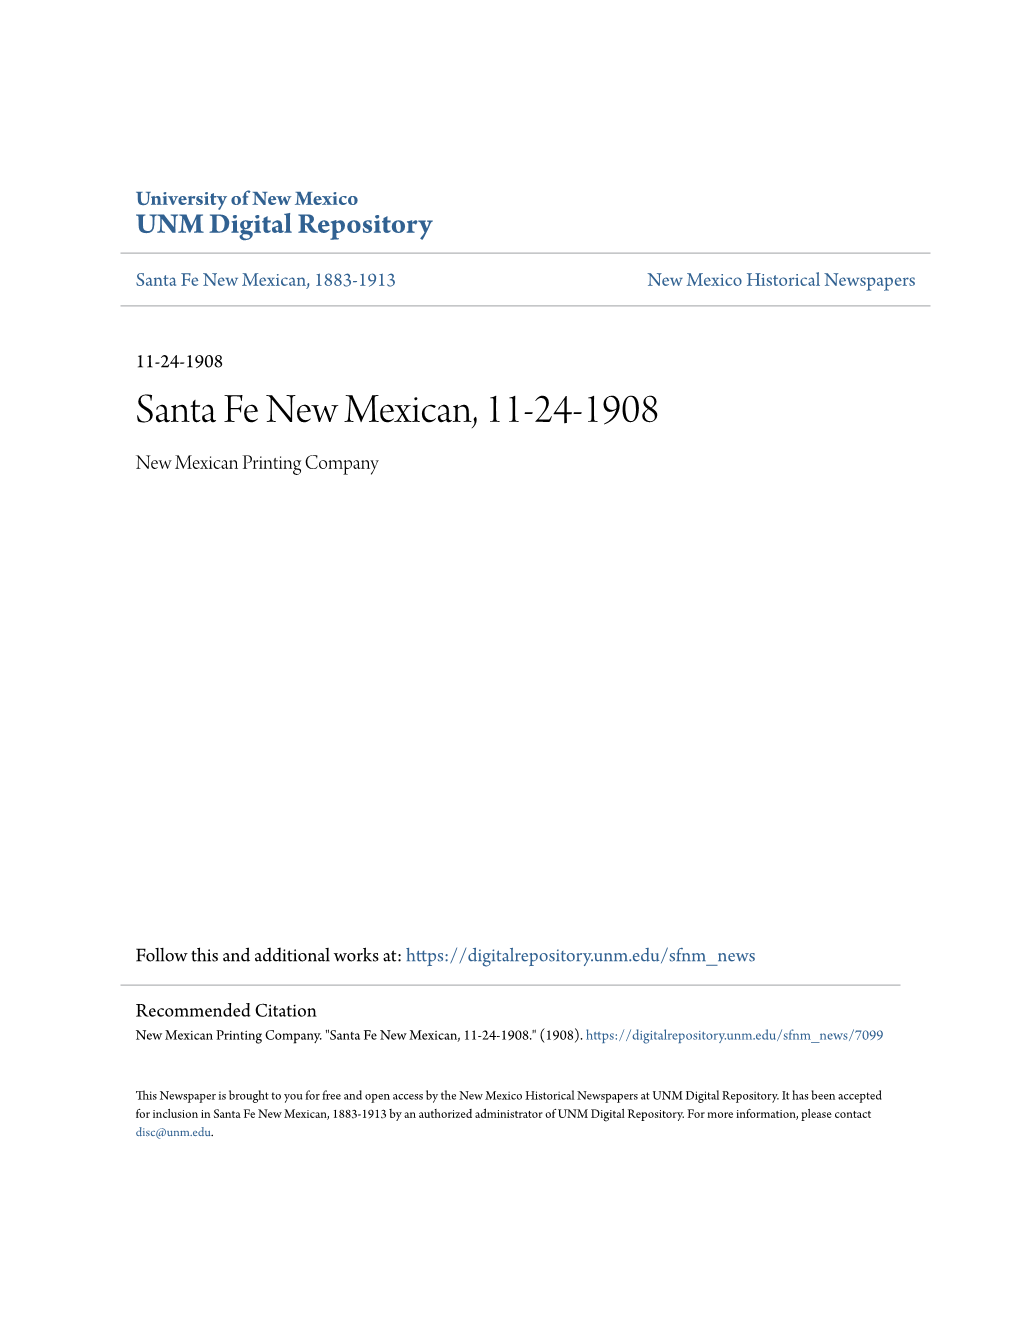 Santa Fe New Mexican, 11-24-1908 New Mexican Printing Company